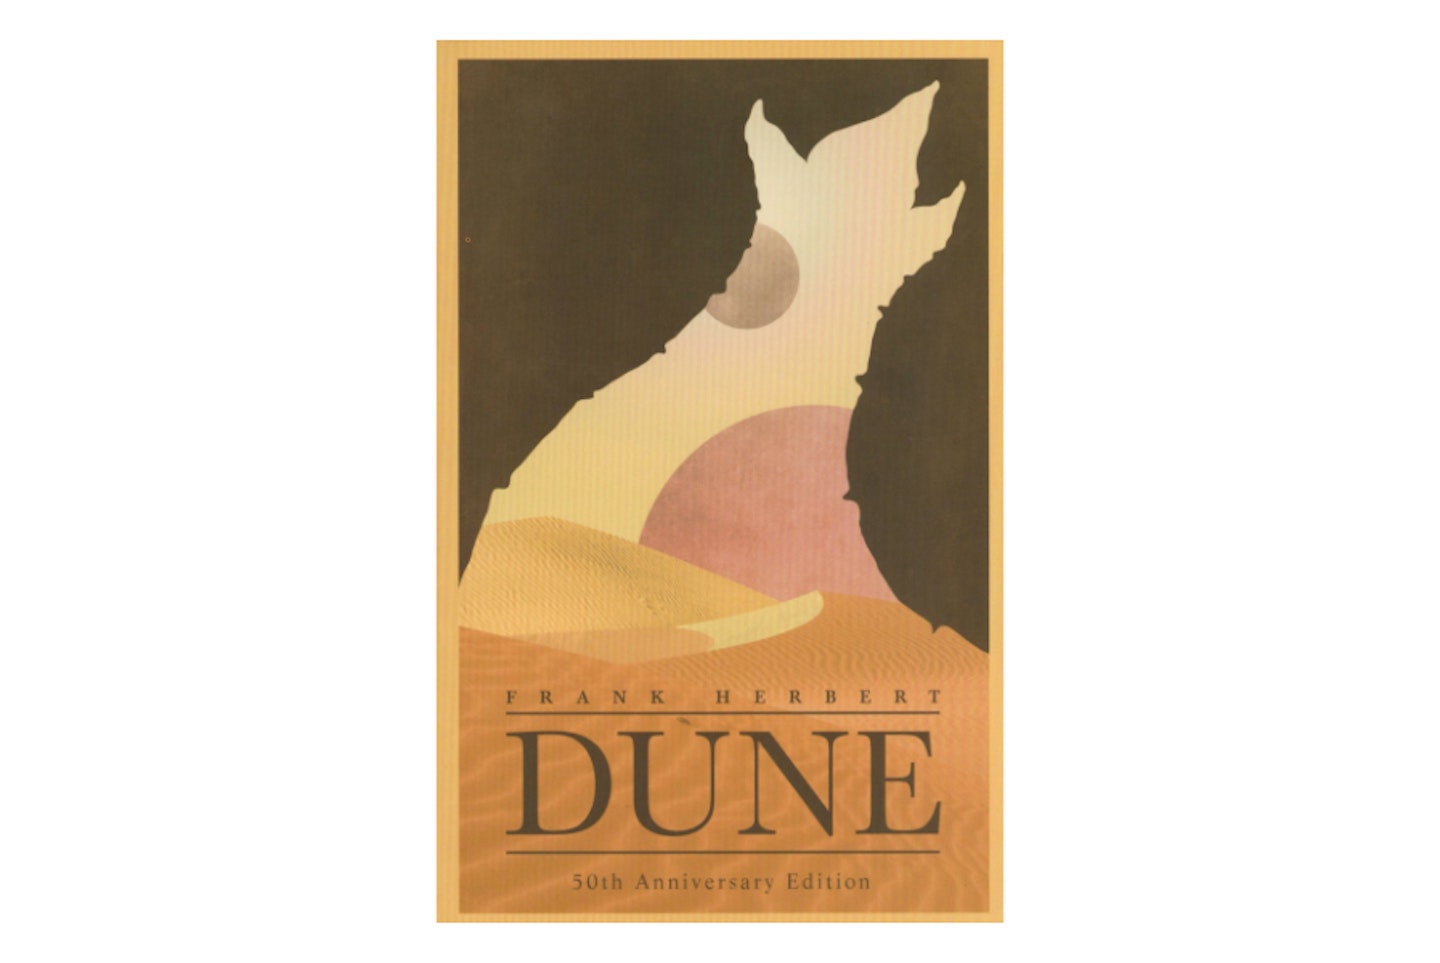 Dune by Frank Herbert, 1965